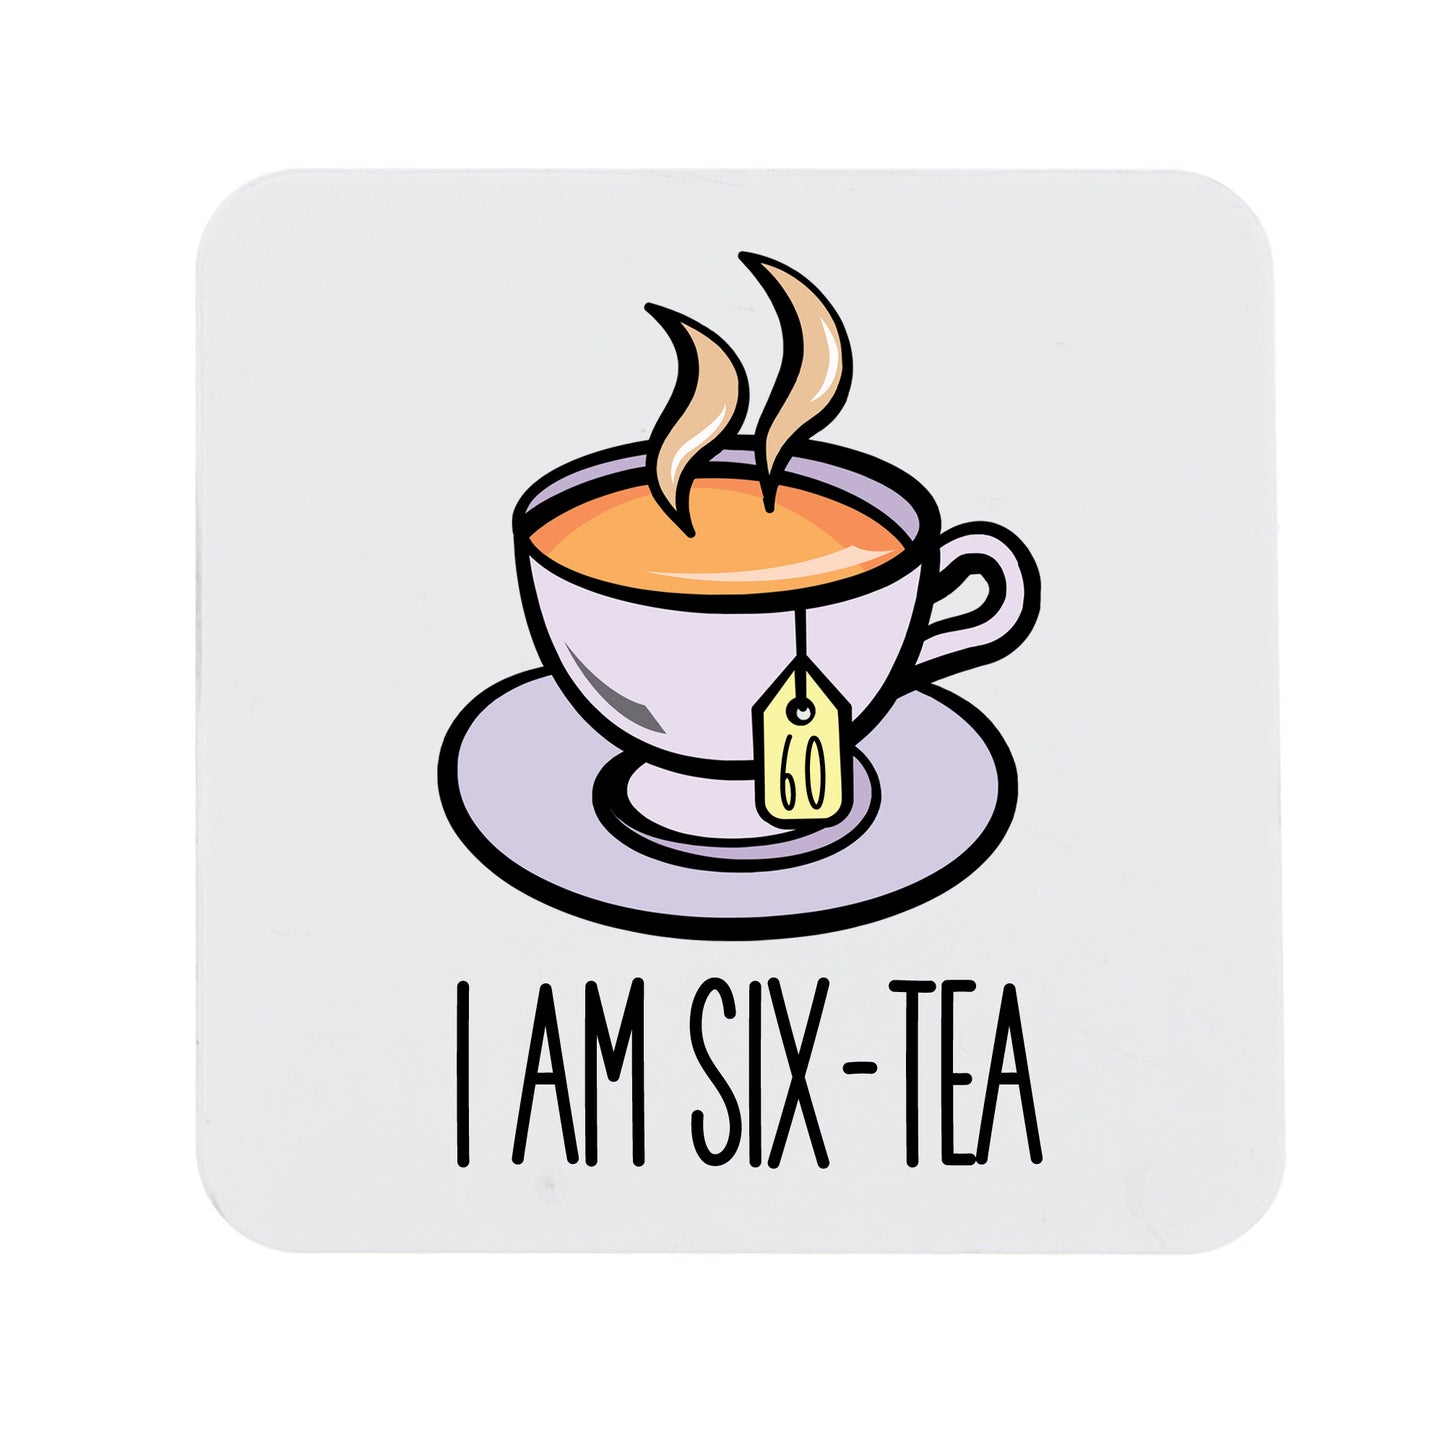 I Am Six-Tea Funny 60th Birthday Mug Gift for Tea Lovers  - Always Looking Good - Printed Coaster Only  